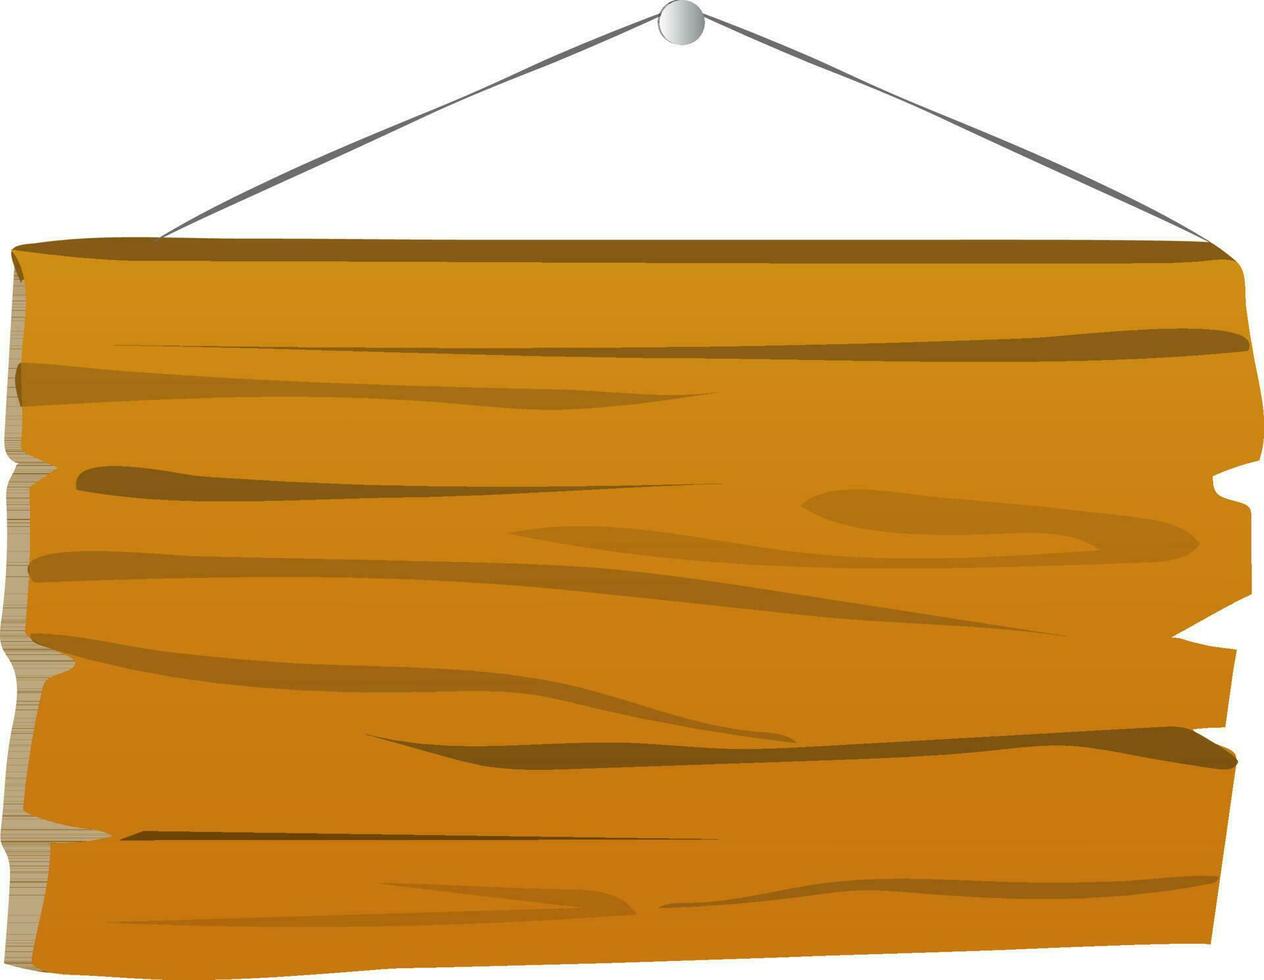 Hanging blank wooden board. vector